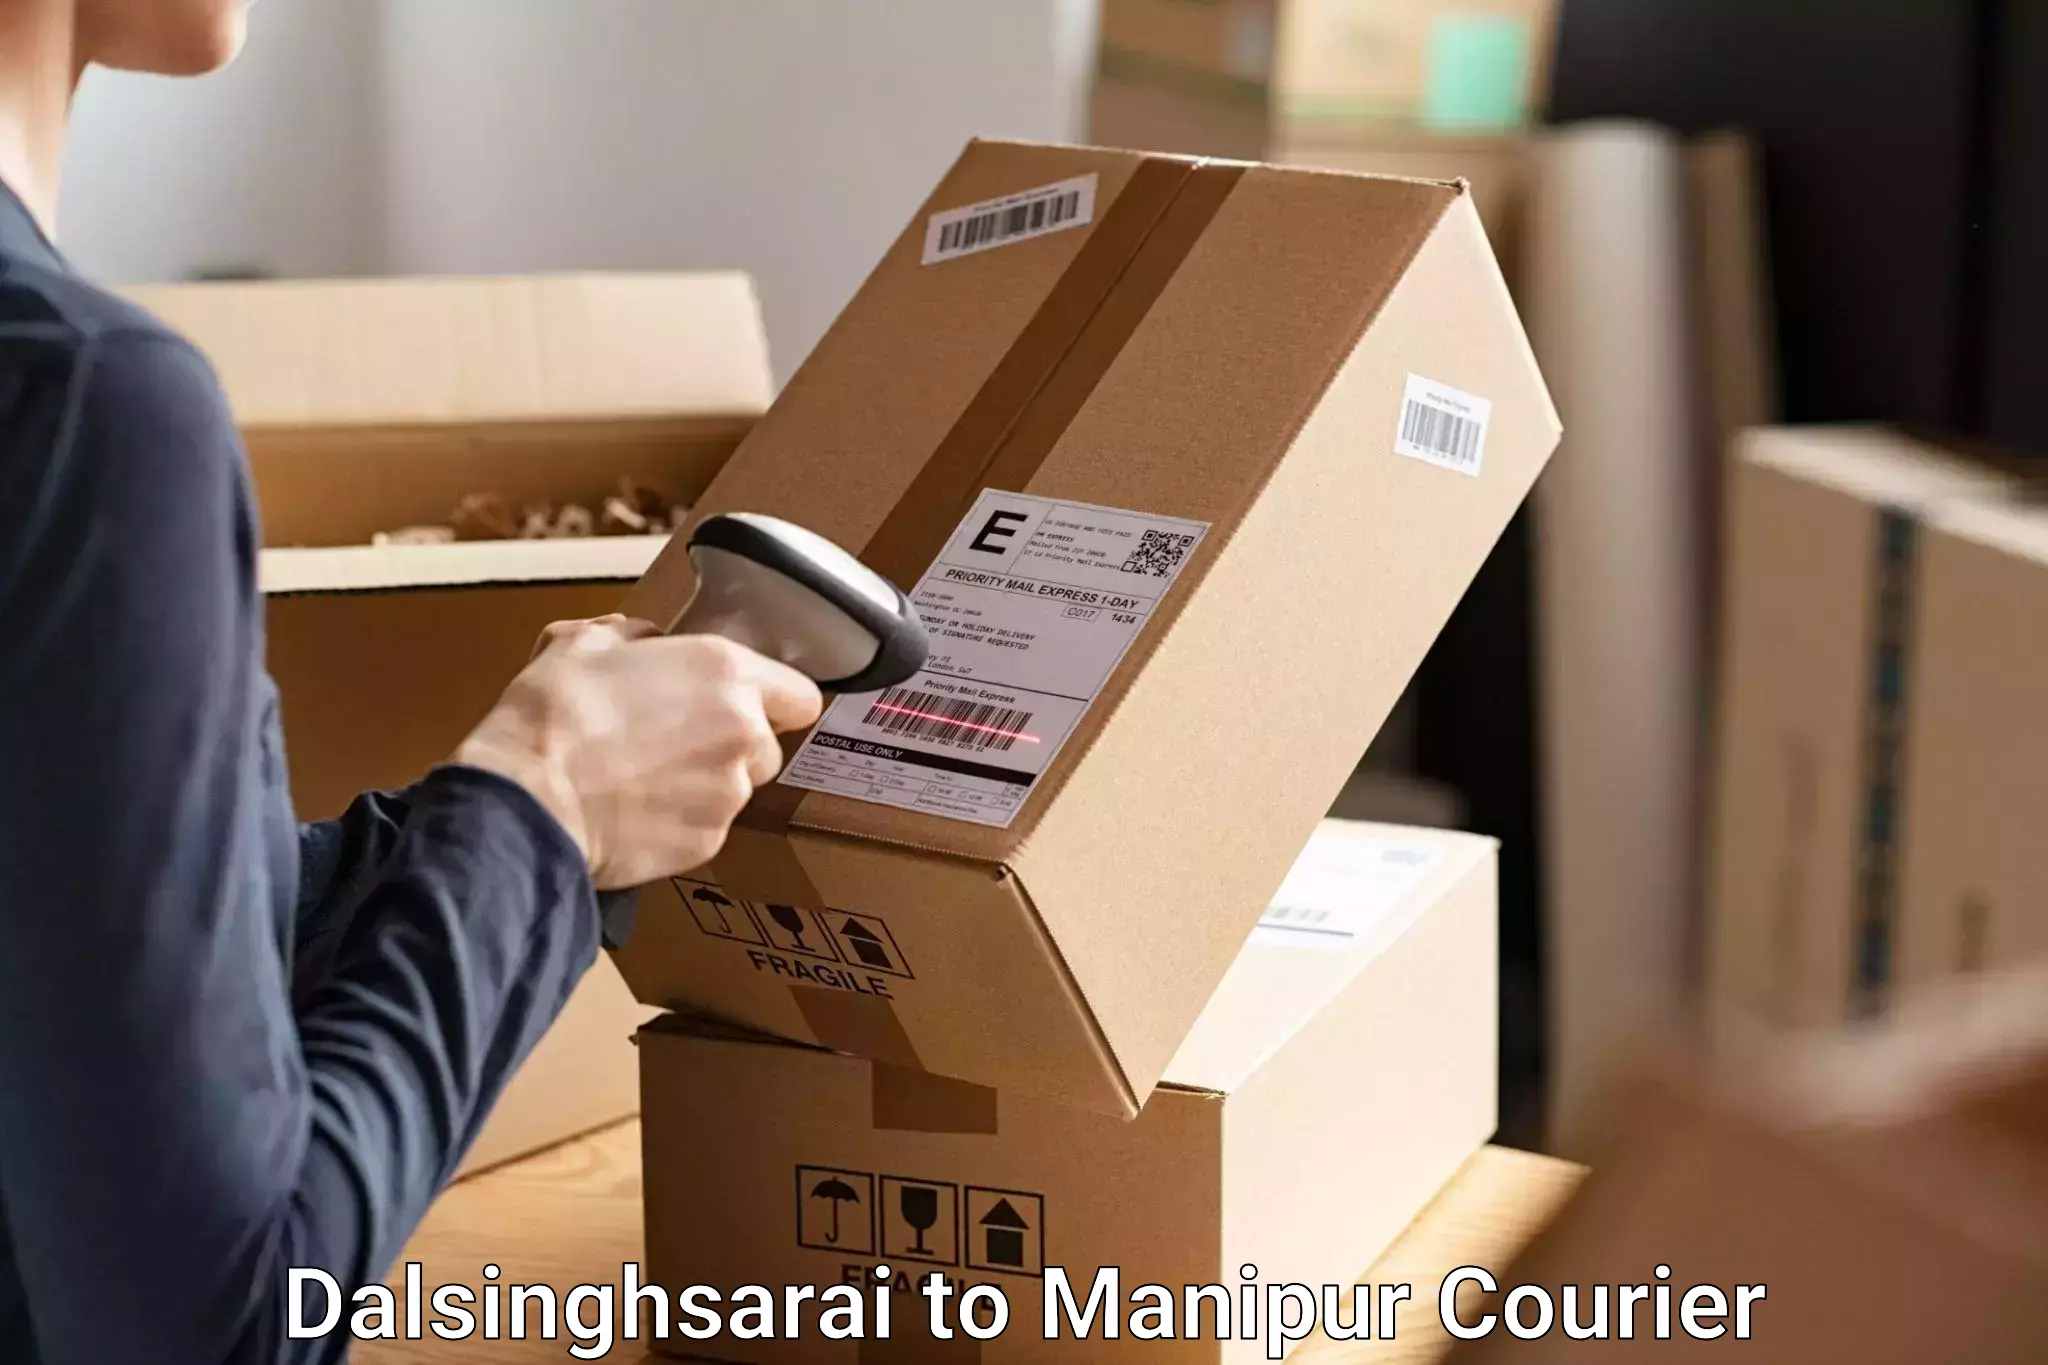 Luggage shipment tracking Dalsinghsarai to Manipur